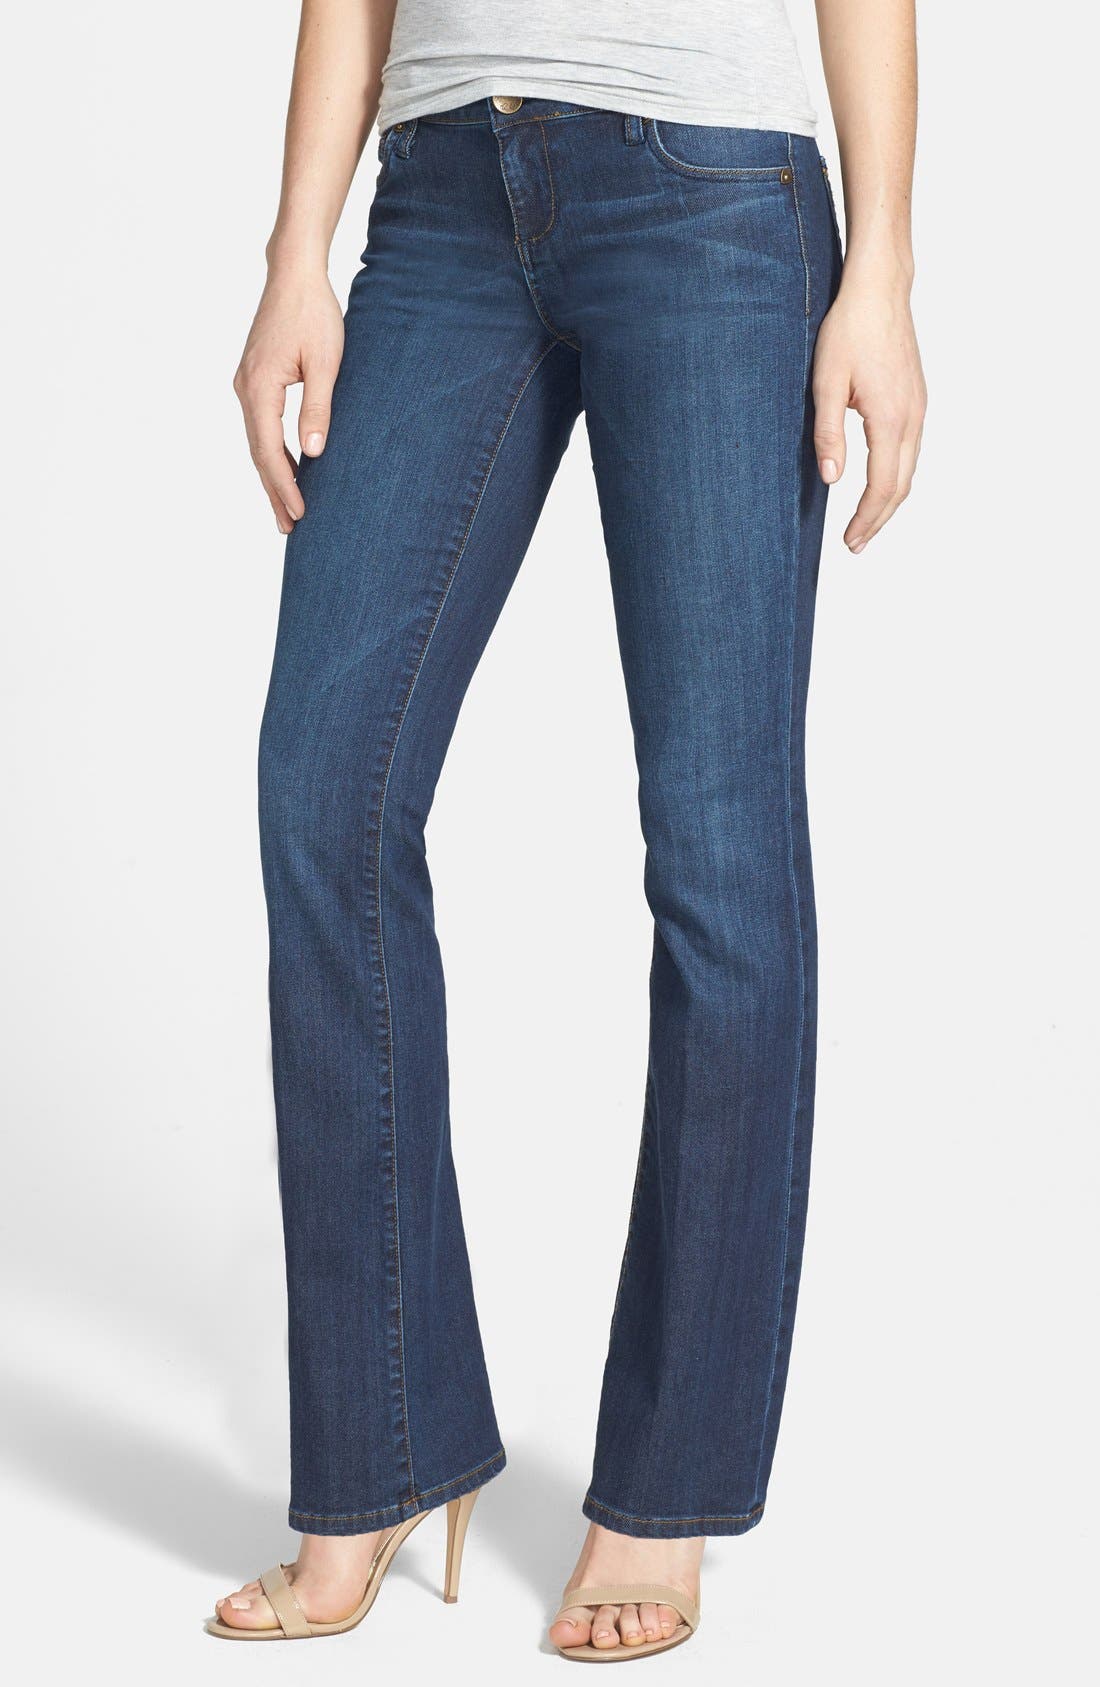 austin clothing company jeans